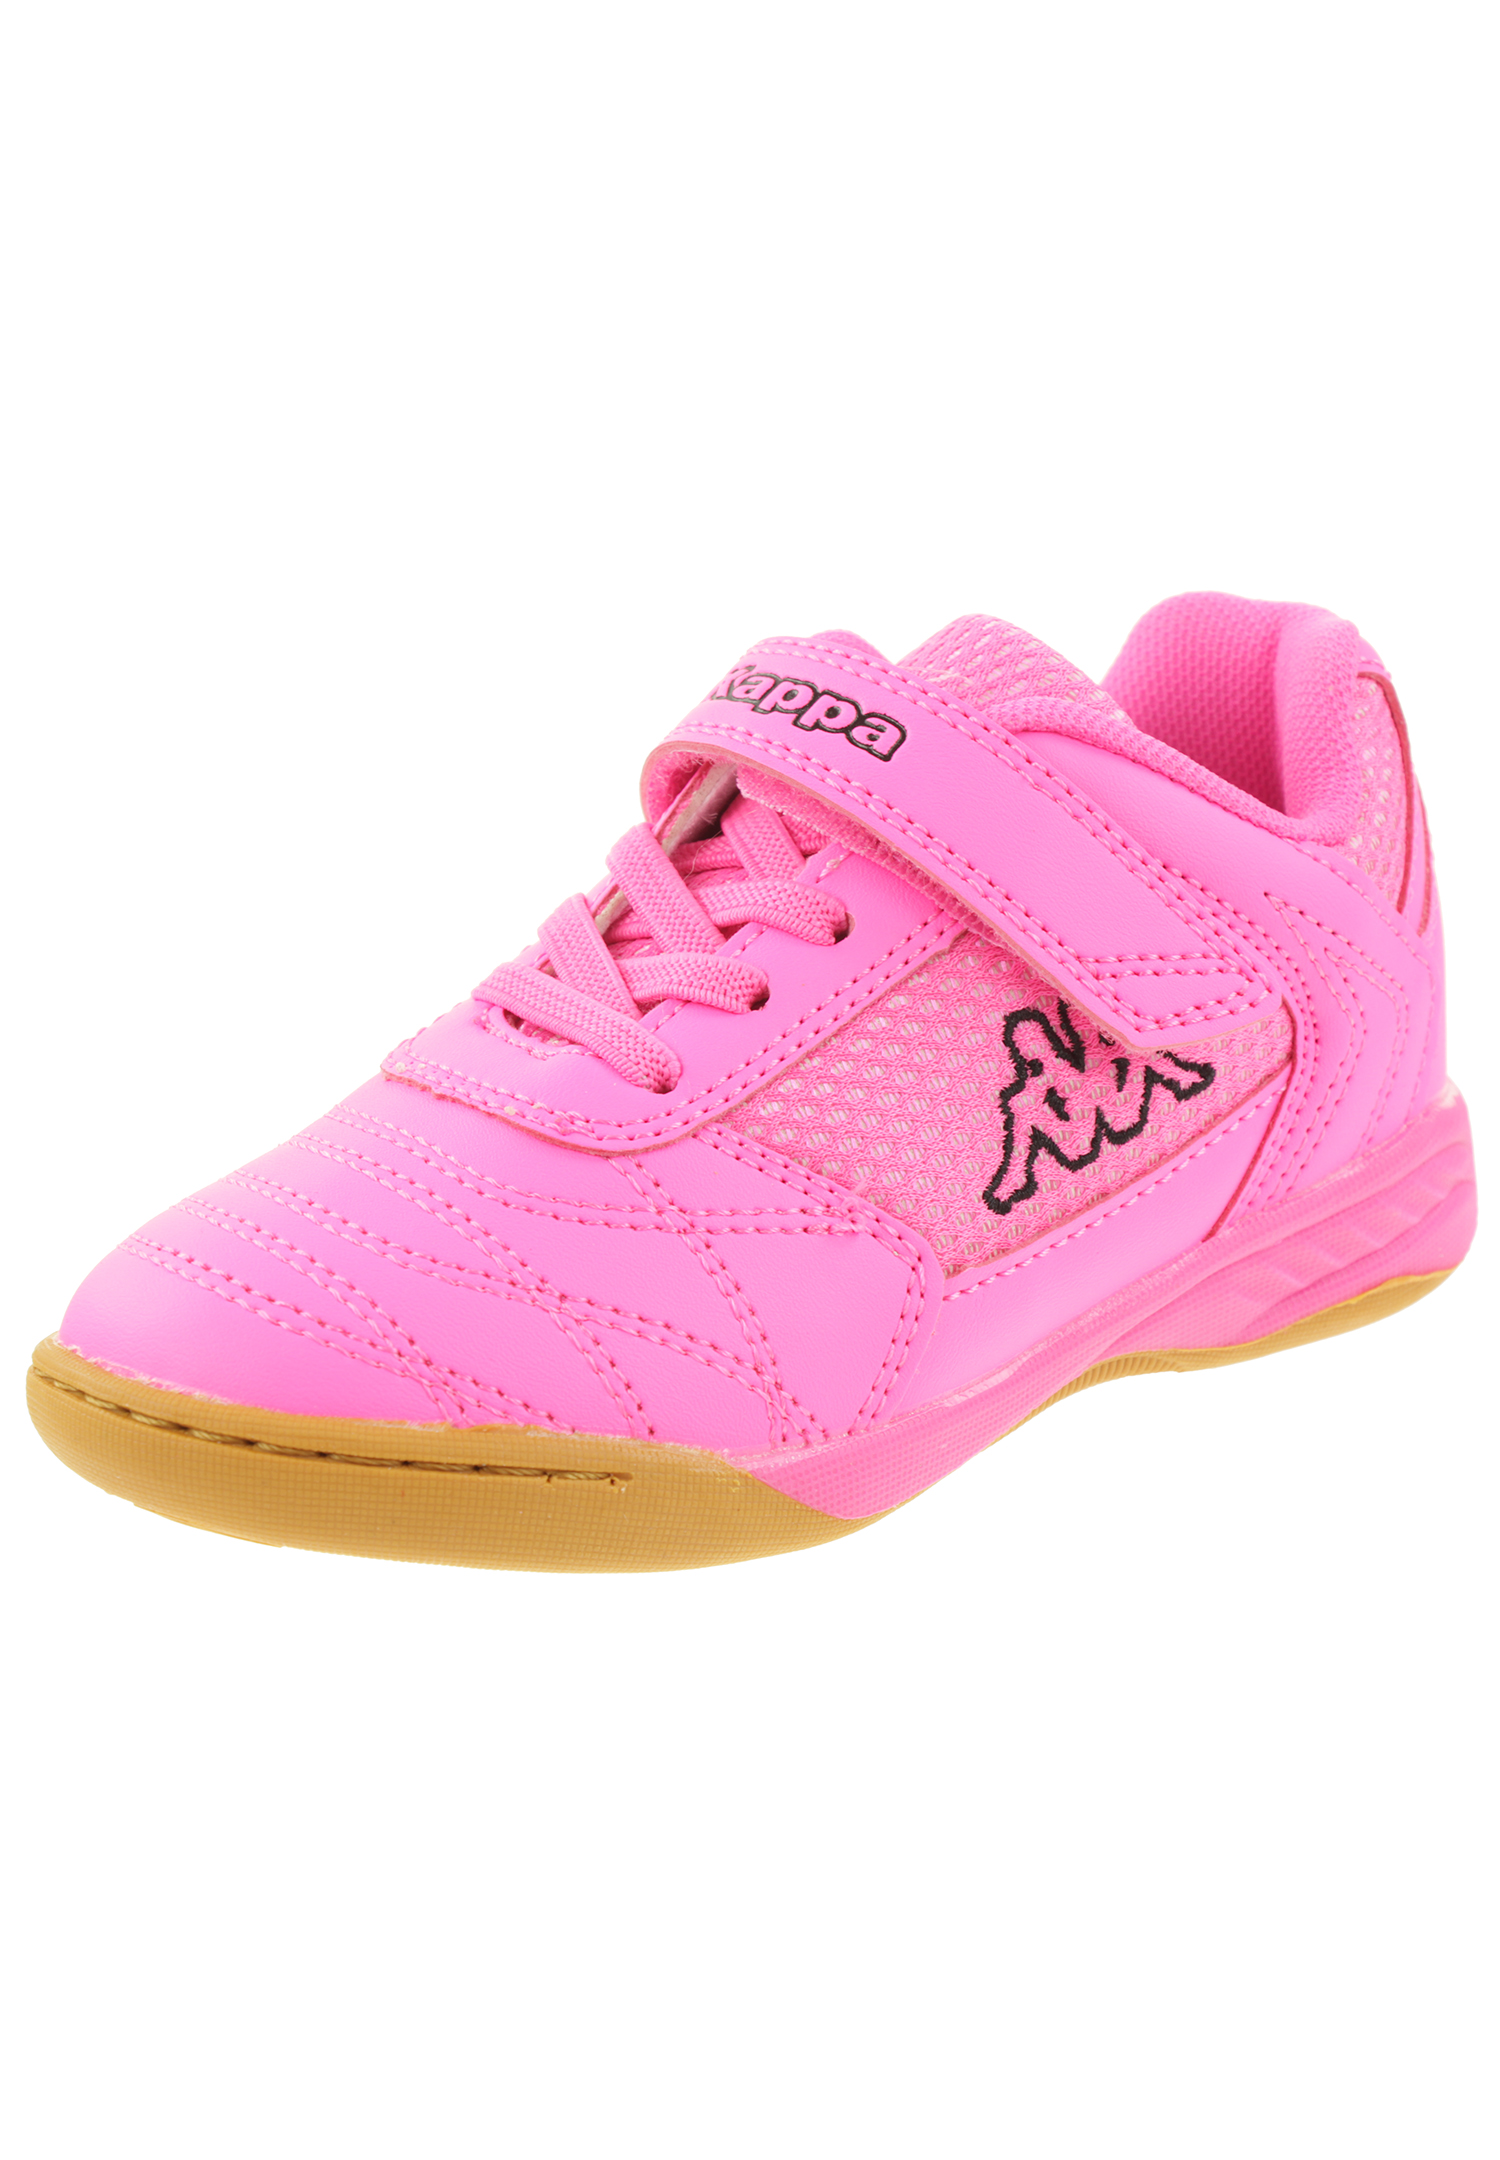 Kappa Mädchen Sneaker Turnschuh 260765OCK 2211 pink/black